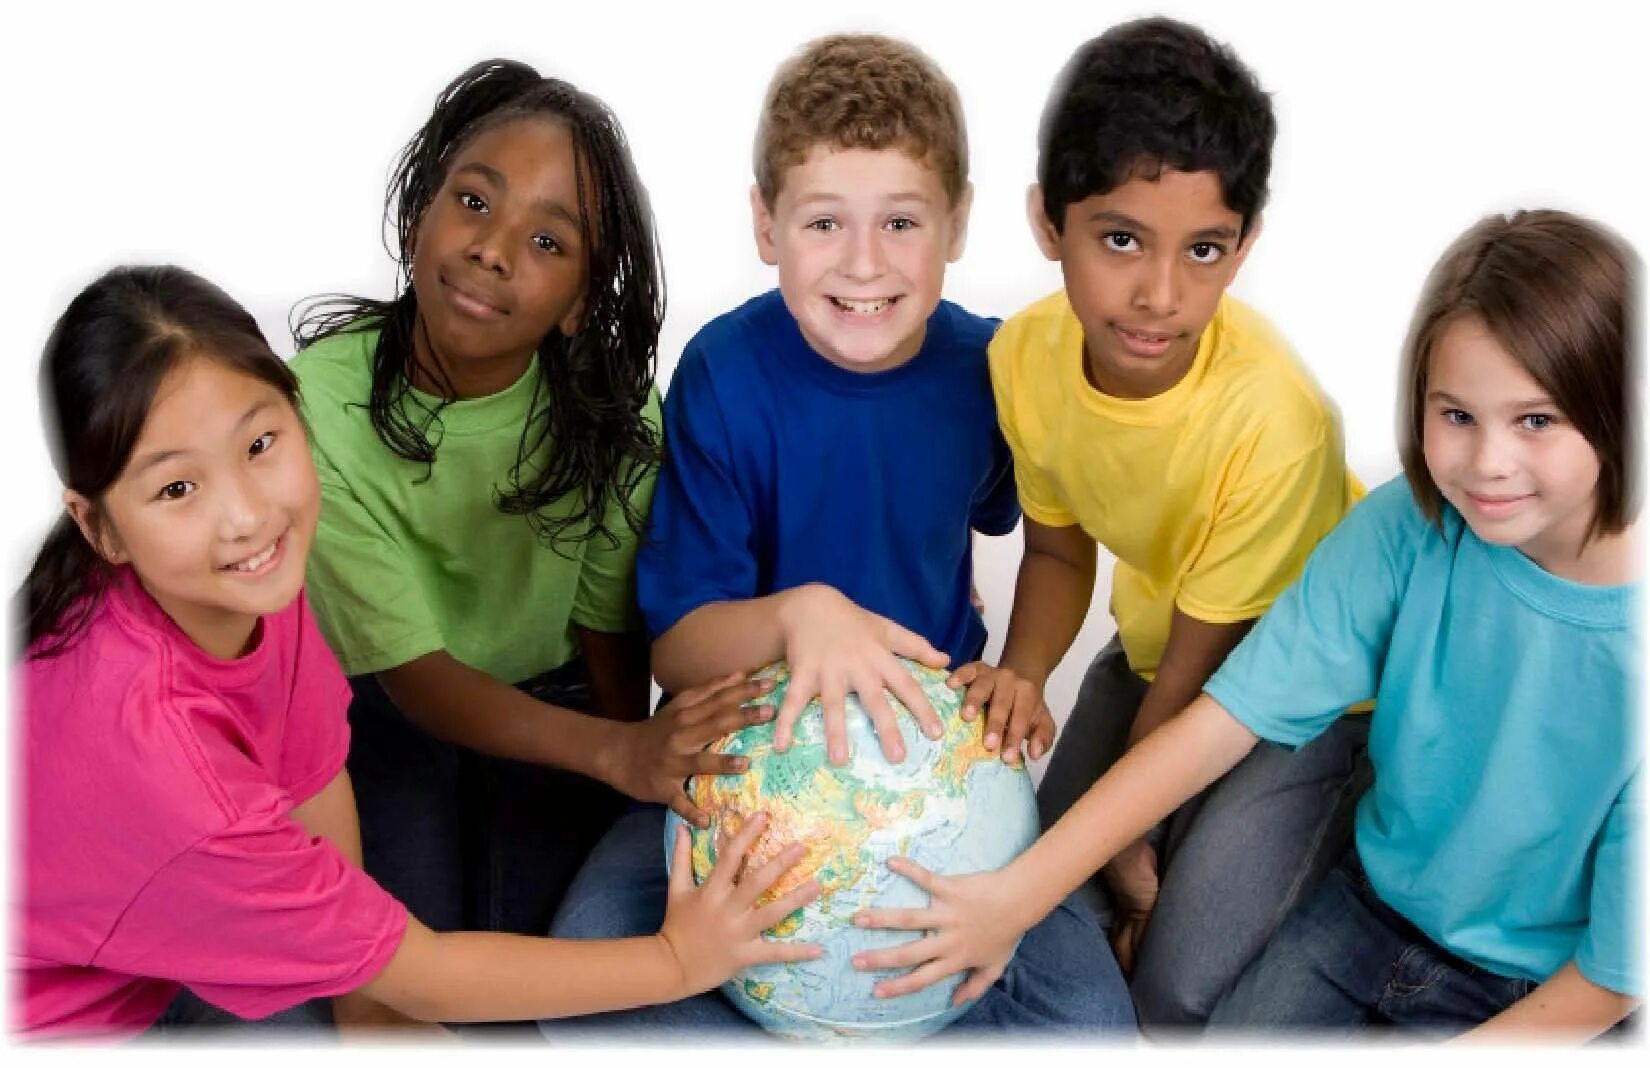 Child world 2. Интернациональные дети. Разные дети. Дети разных национальностей. Разноцветные дети.